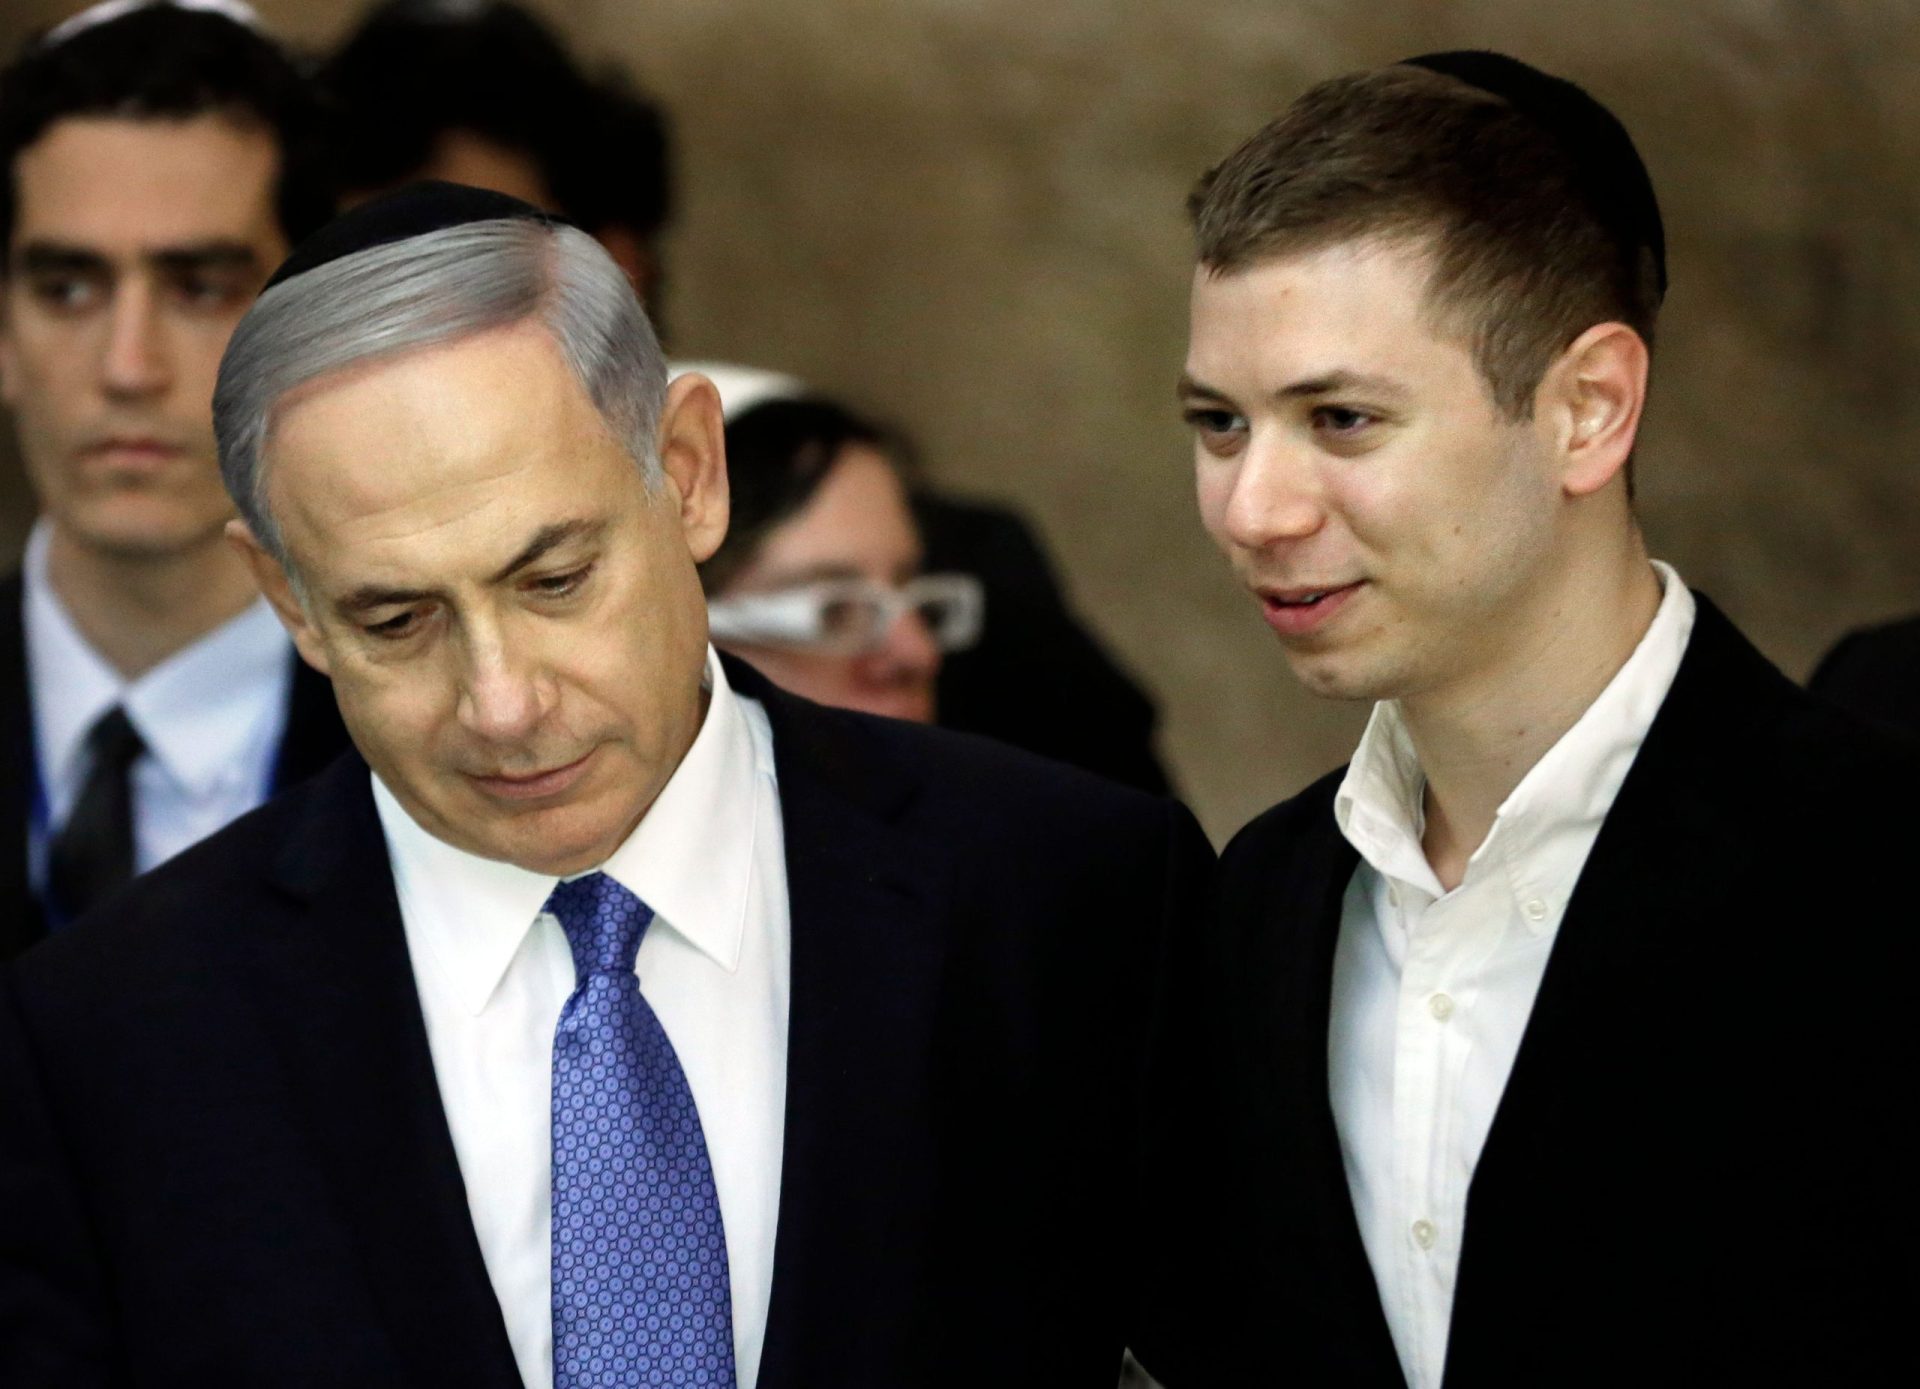 Filho de Netanyahu embaraça pai à porta de clube de striptease